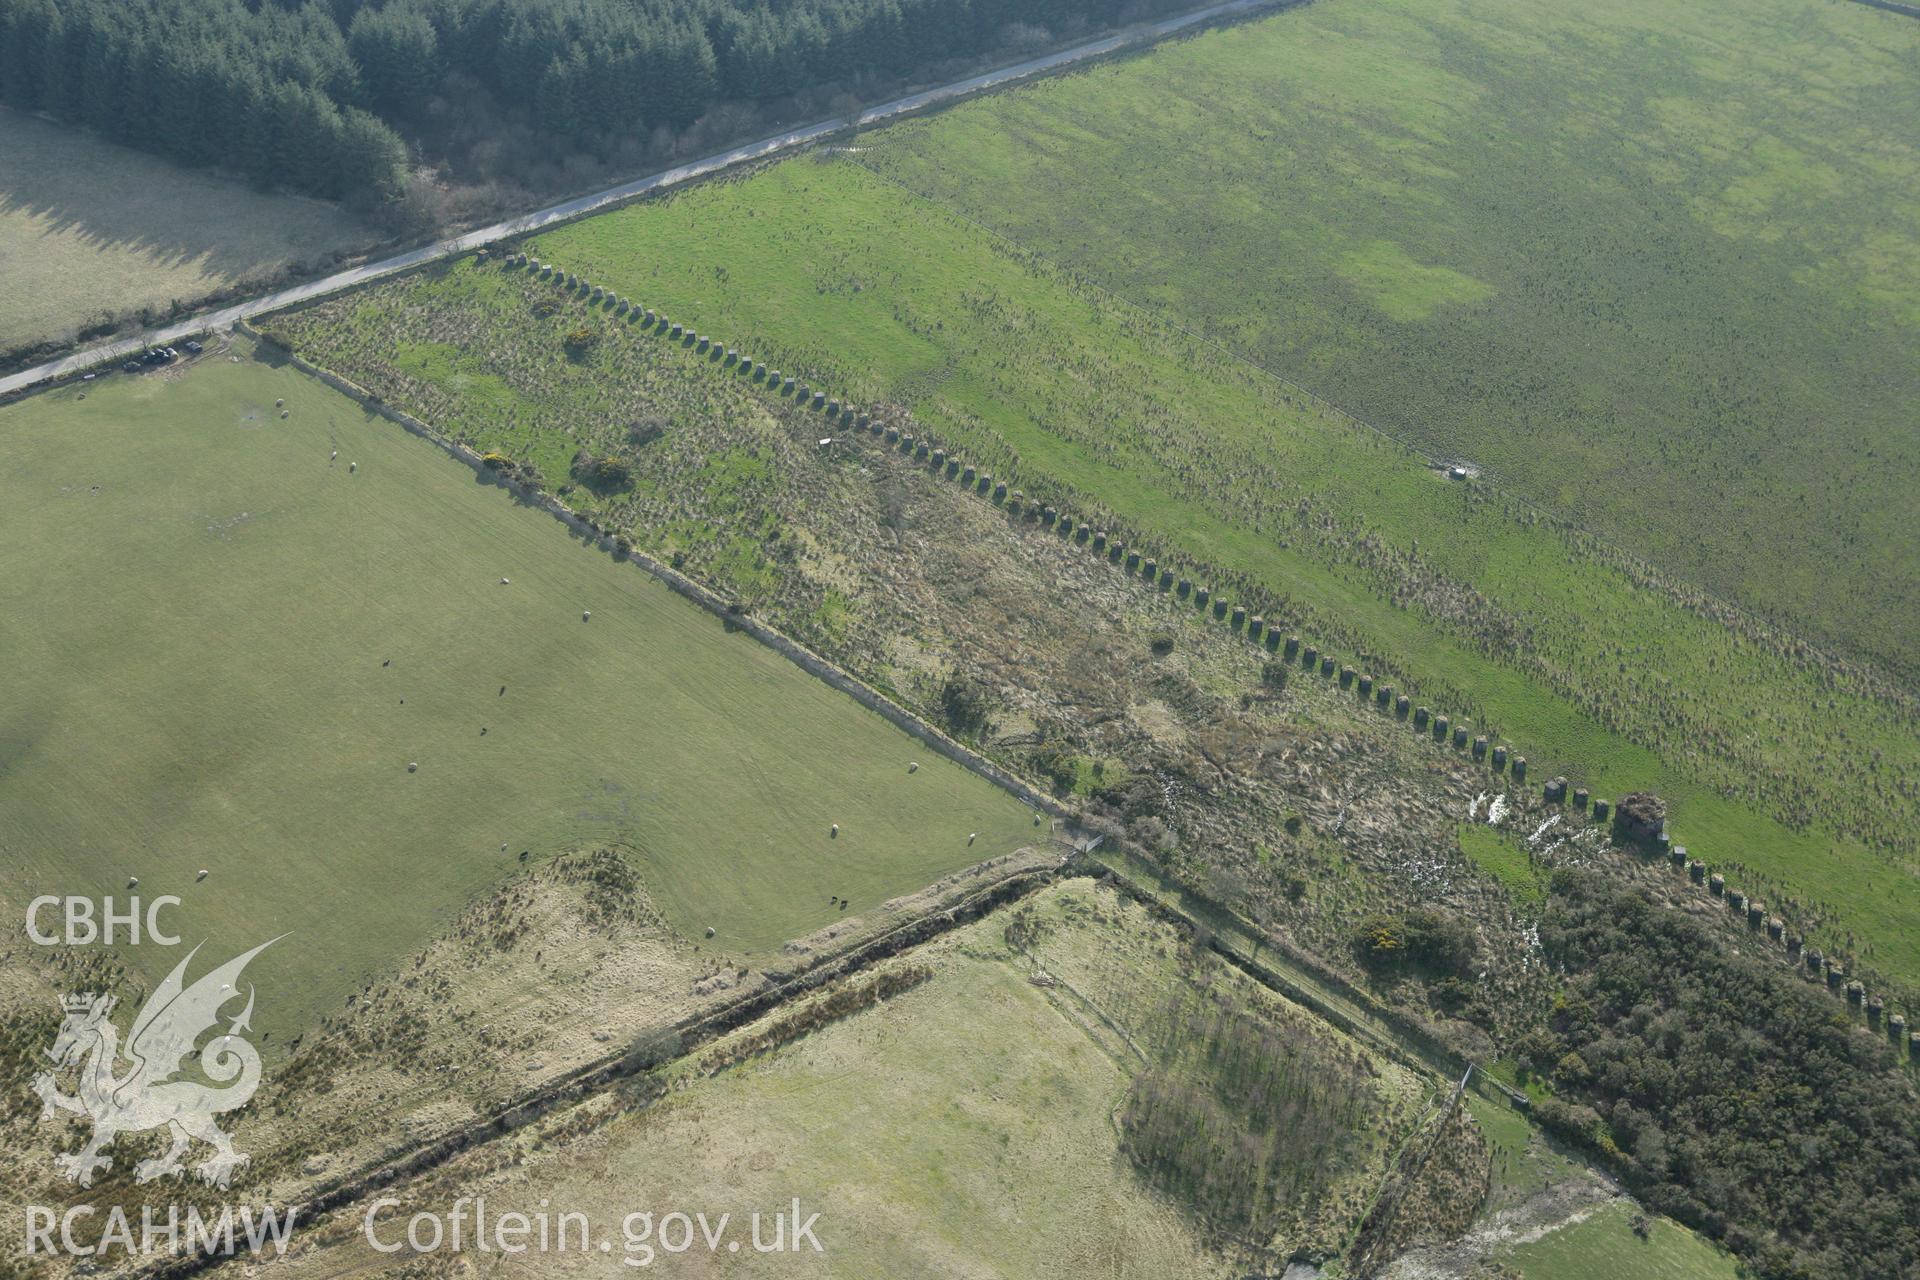 RCAHMW colour oblique aerial photograph of Rhos Llangeler Stop Line. Taken on 13 April 2010 by Toby Driver